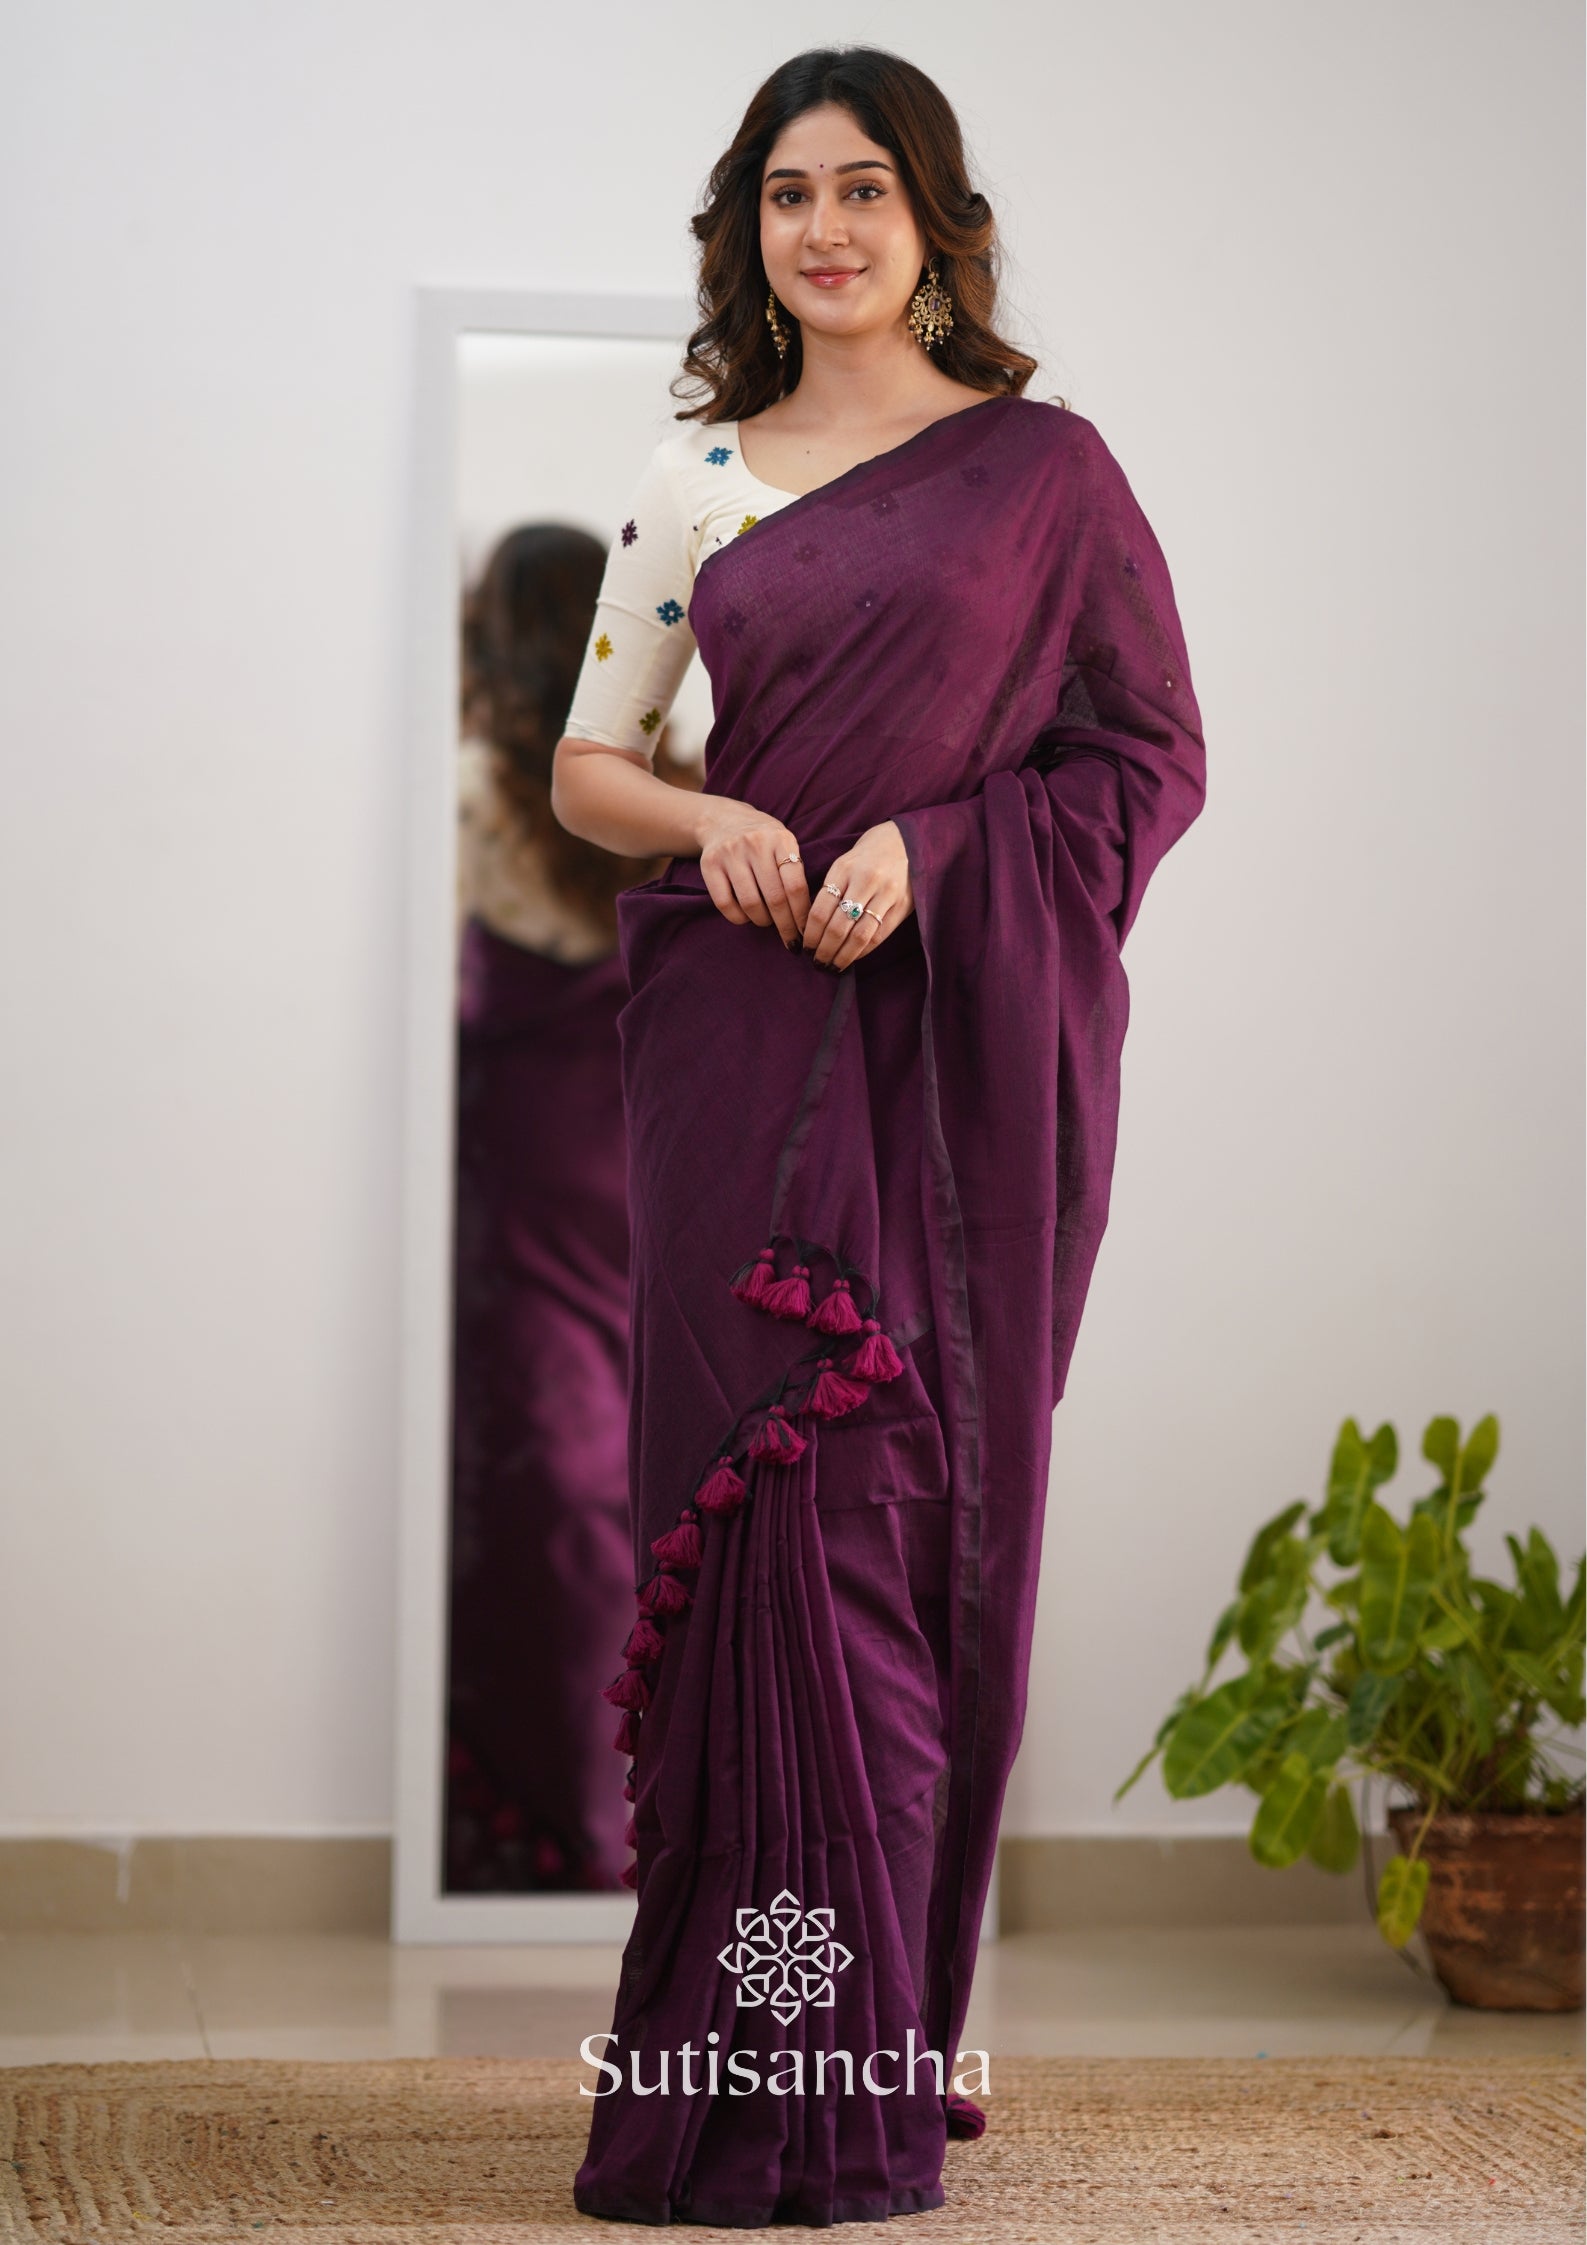 Sutisancha Magenta Handloom Cotton Saree with Designer Blouse